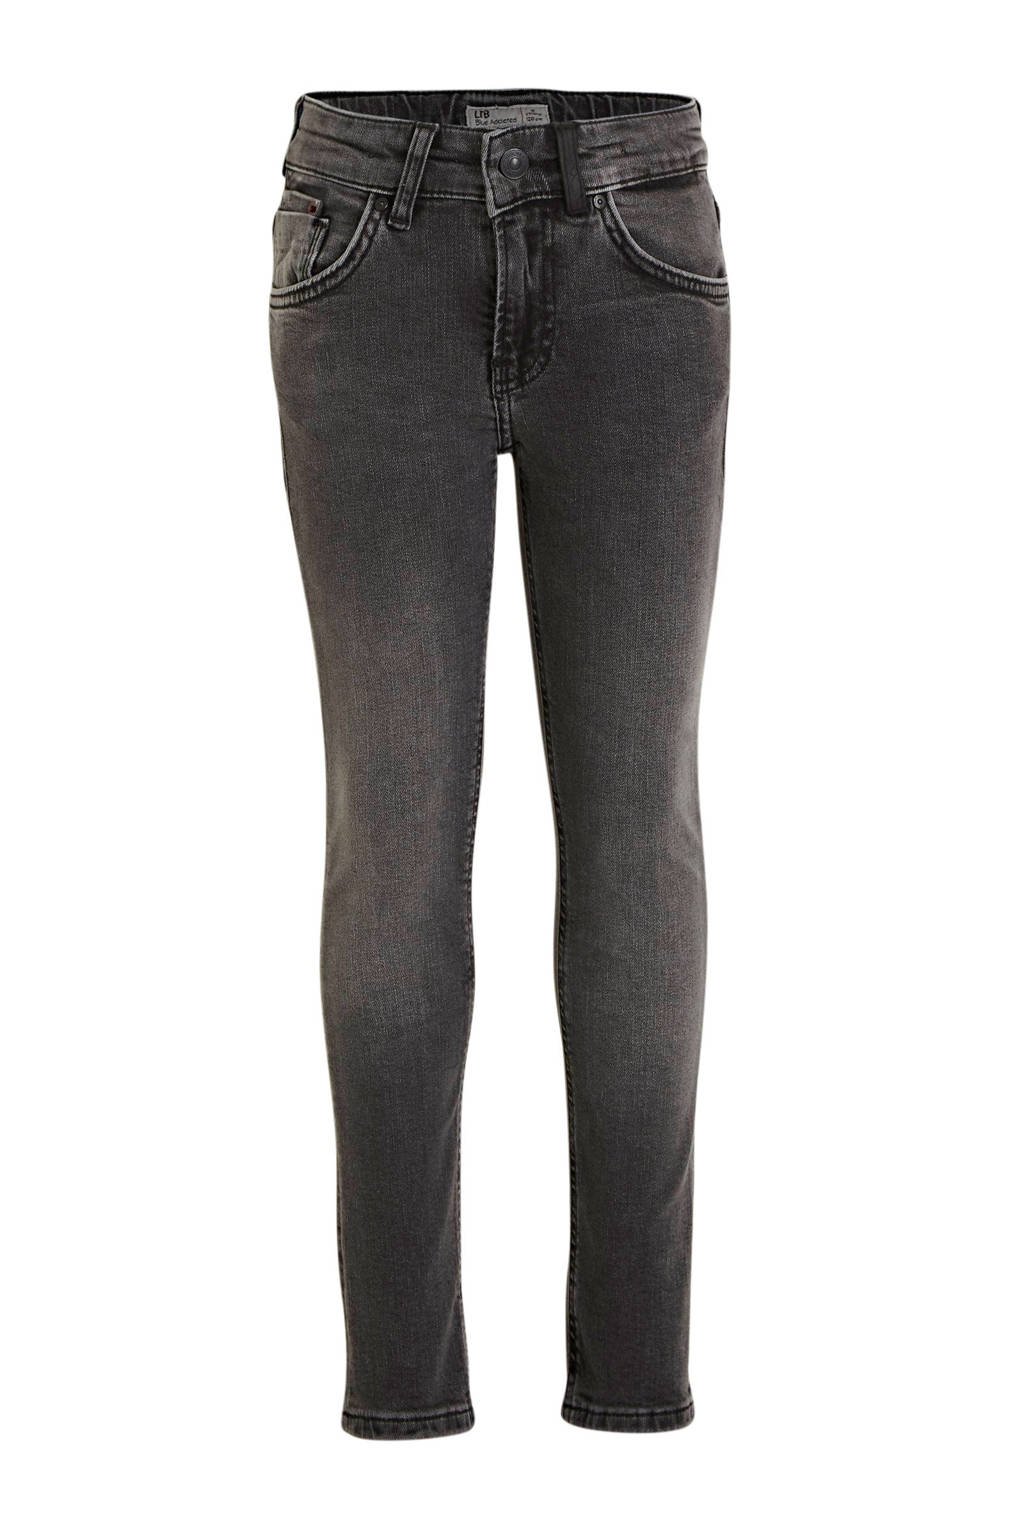 LTB slim fit jeans Smarty grijs stonewashed, Grijs stonewashed